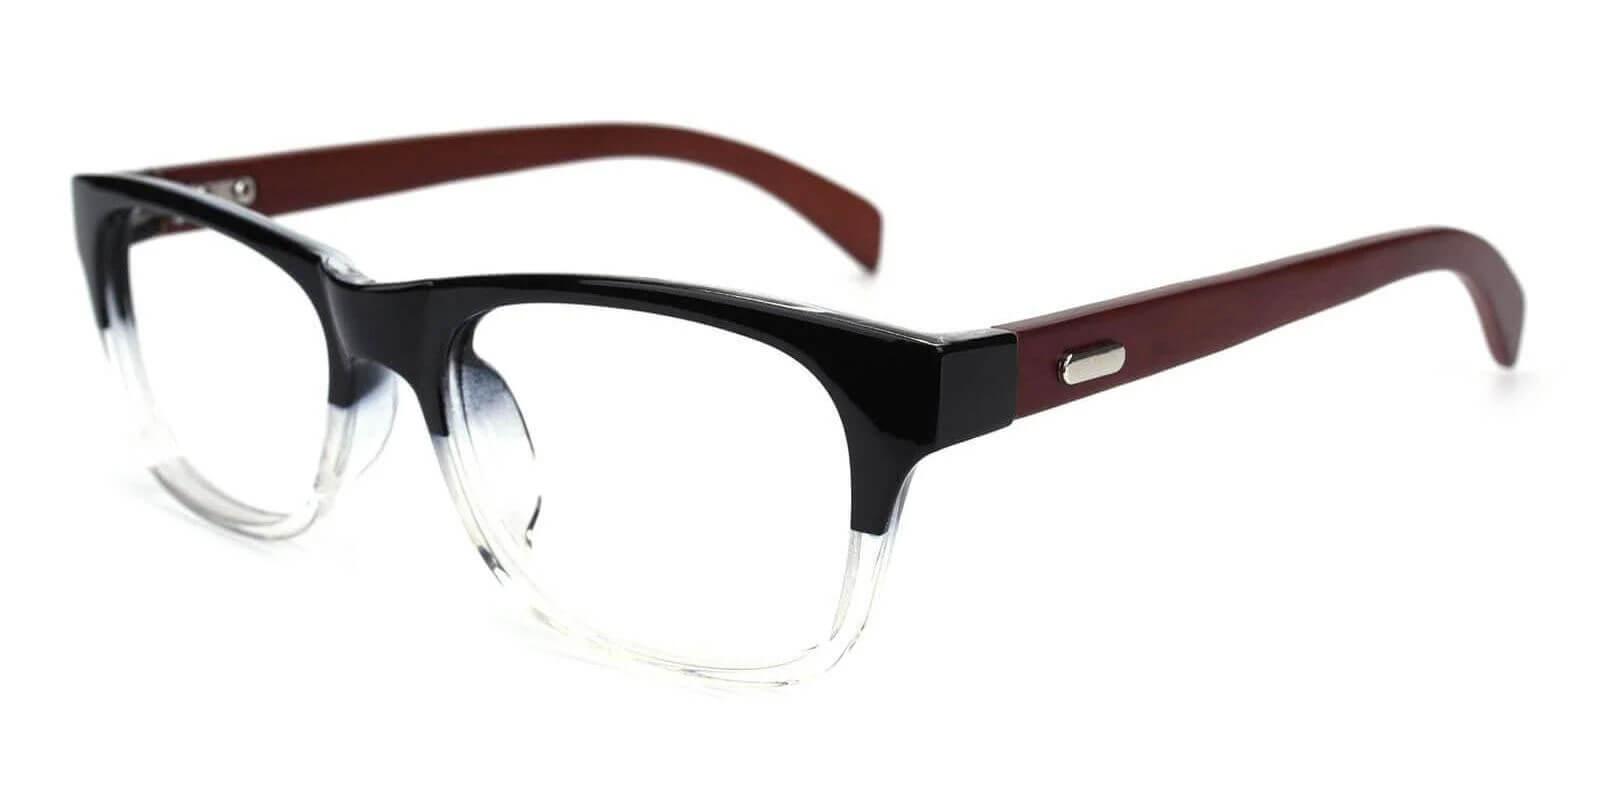 Germantown Multicolor Acetate Eyeglasses , UniversalBridgeFit Frames from ABBE Glasses